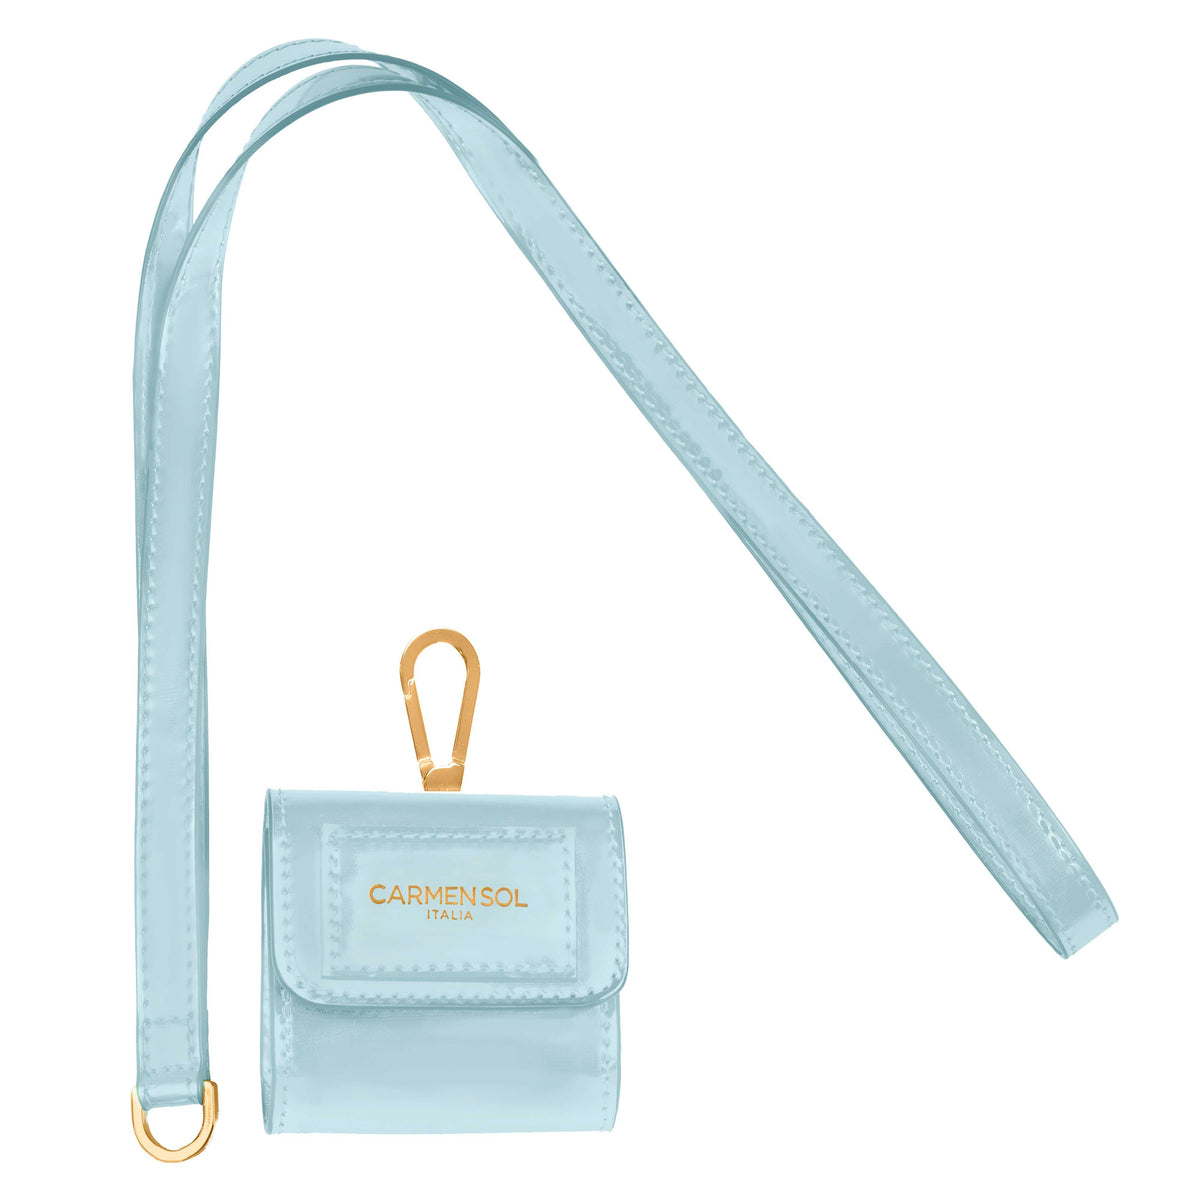 Baby blue Carmen Sol airpod case with detachable straps